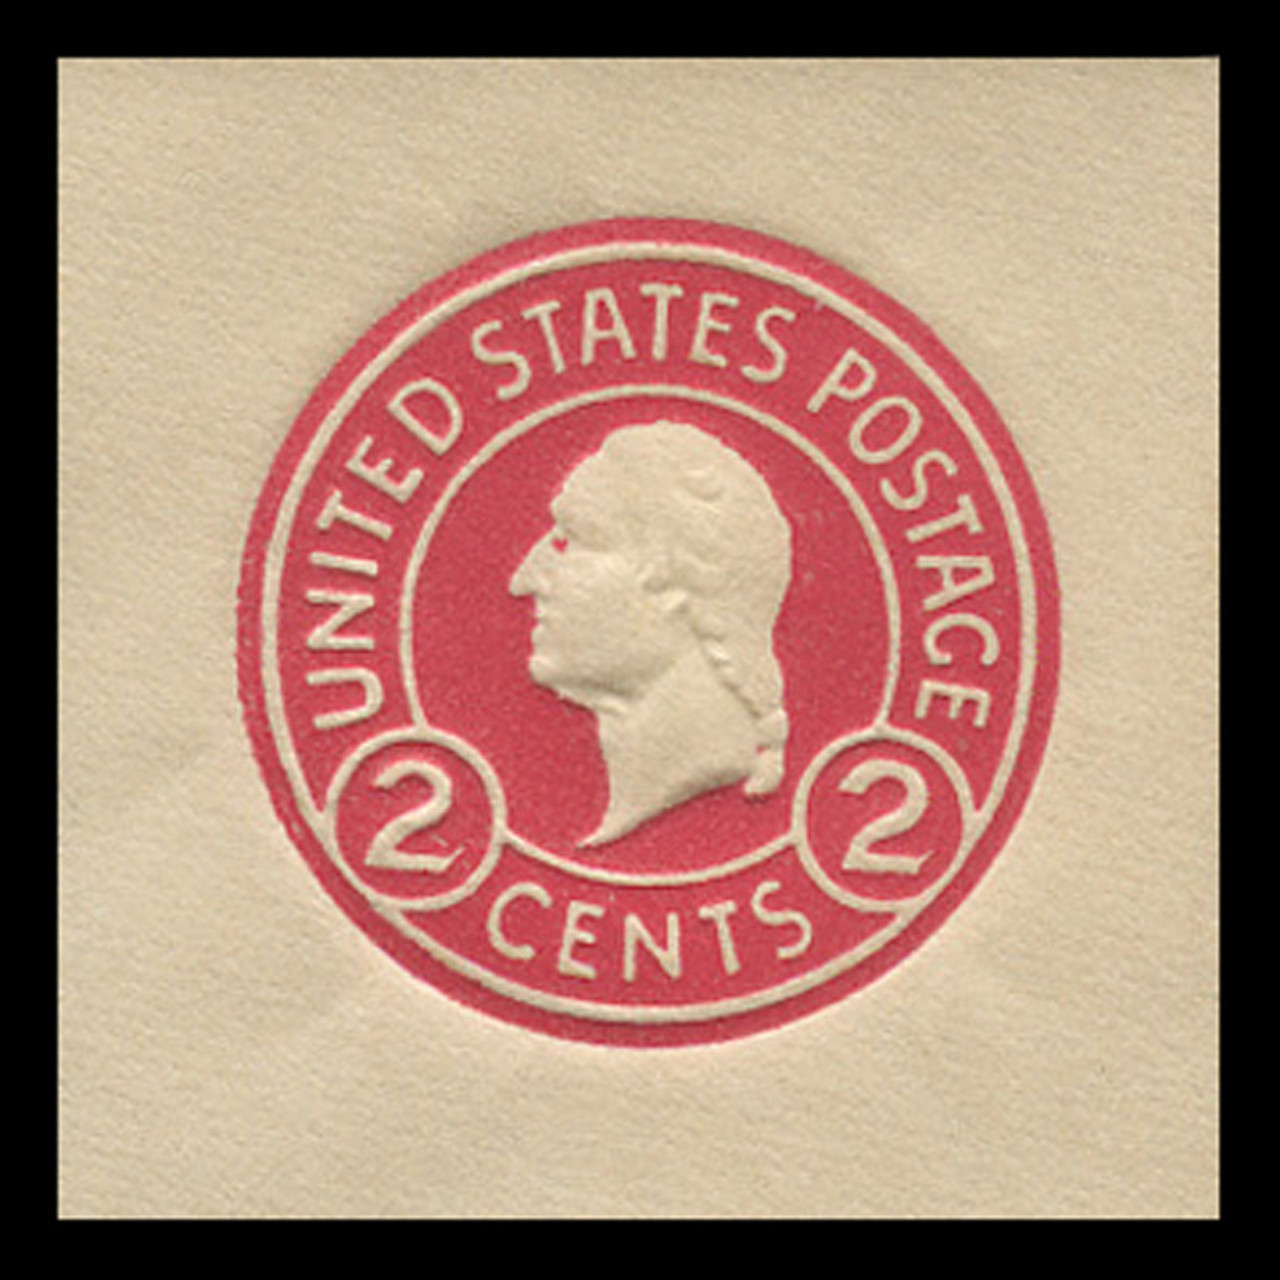 USA Scott # U 429f, 1915-32 2c Washington, Scott Die U93, carmine on white, Die 7 - Mint Cut Square